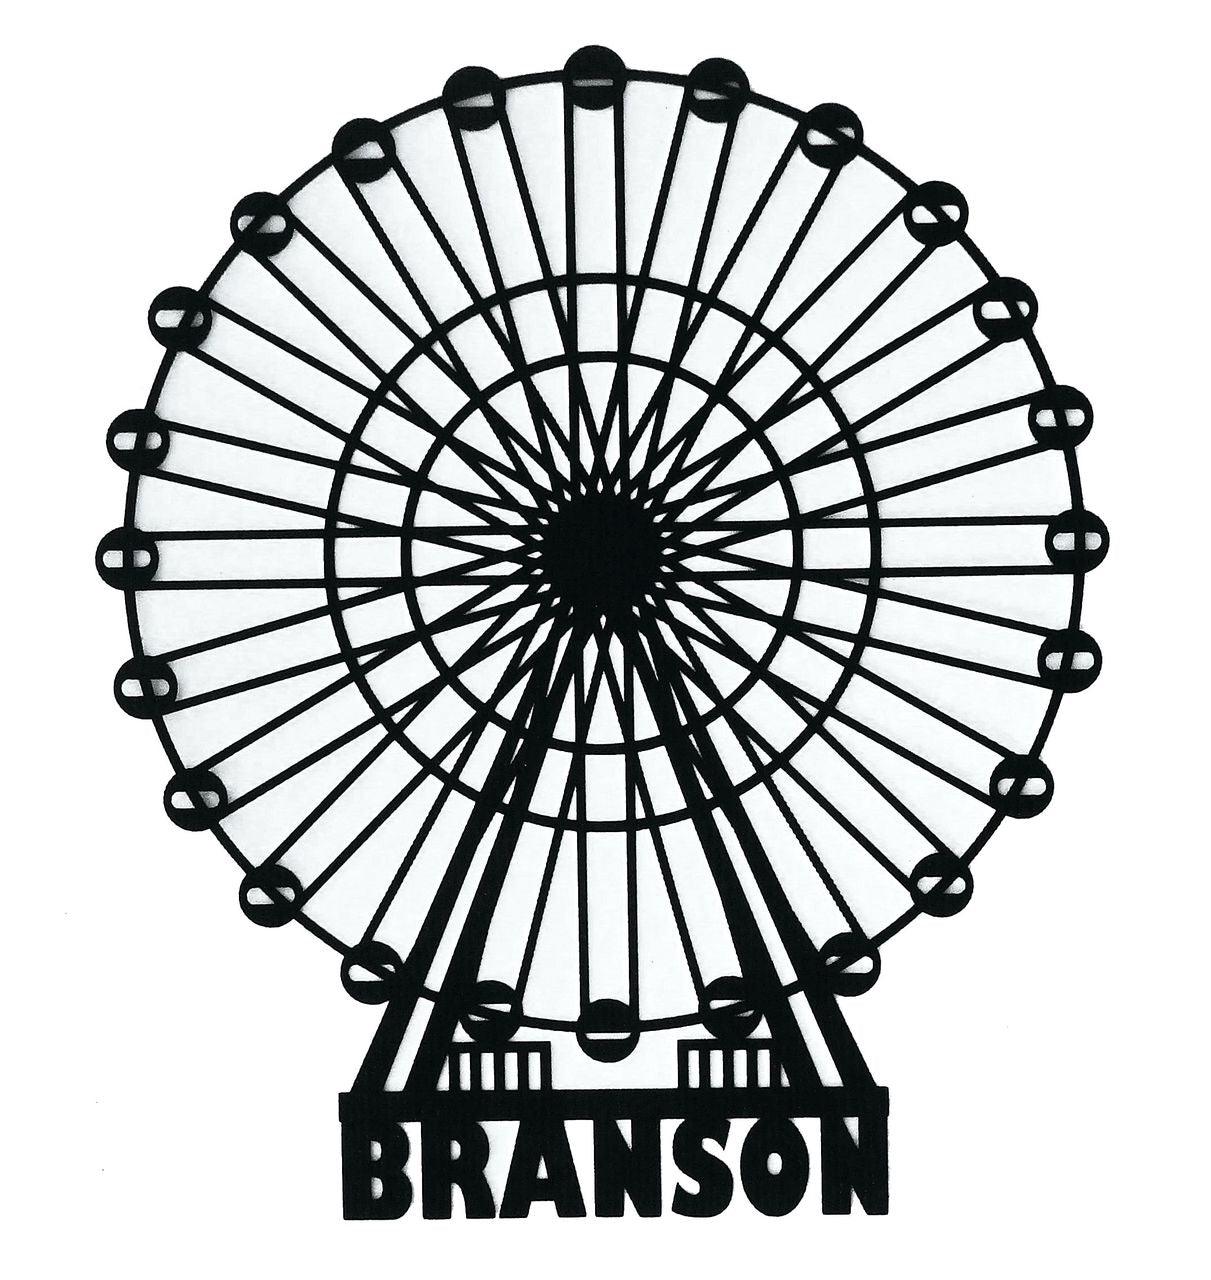 Branson, Missouri 5 x 6 Ferris Wheel Laser Cut Scrapbook Embellishment by SSC Laser Designs